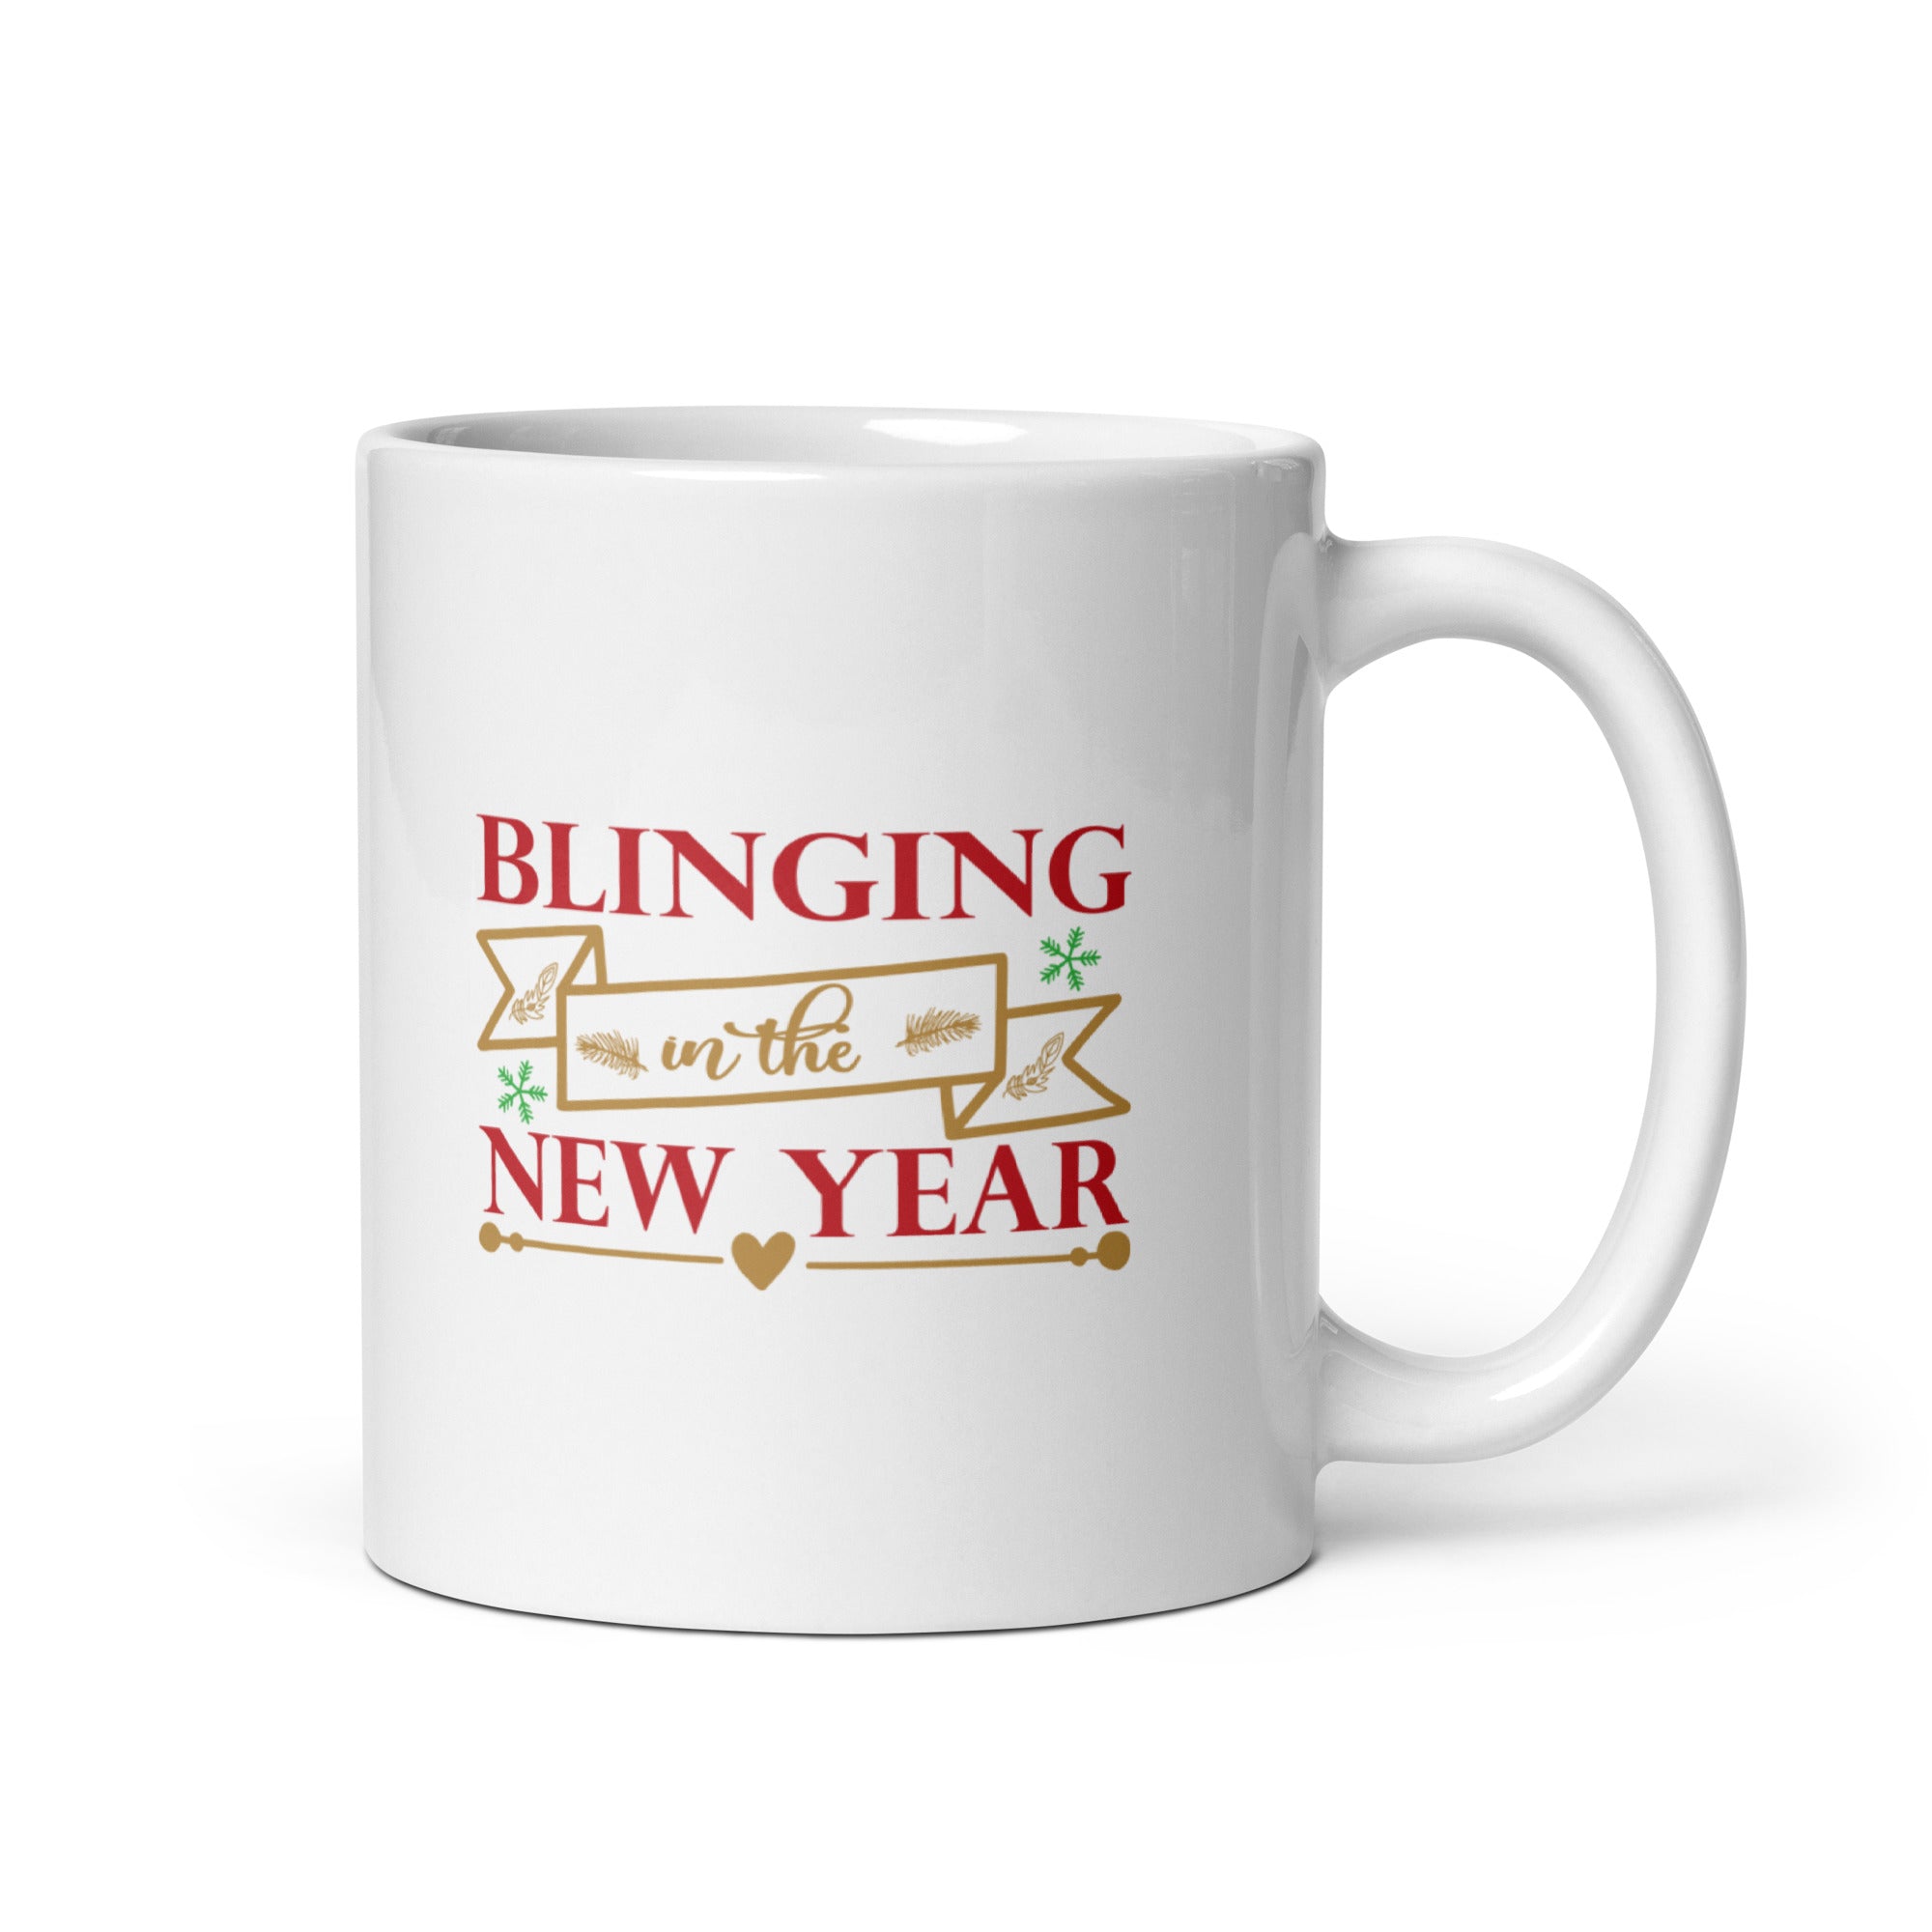 Blinging In The New Year - White glossy mug